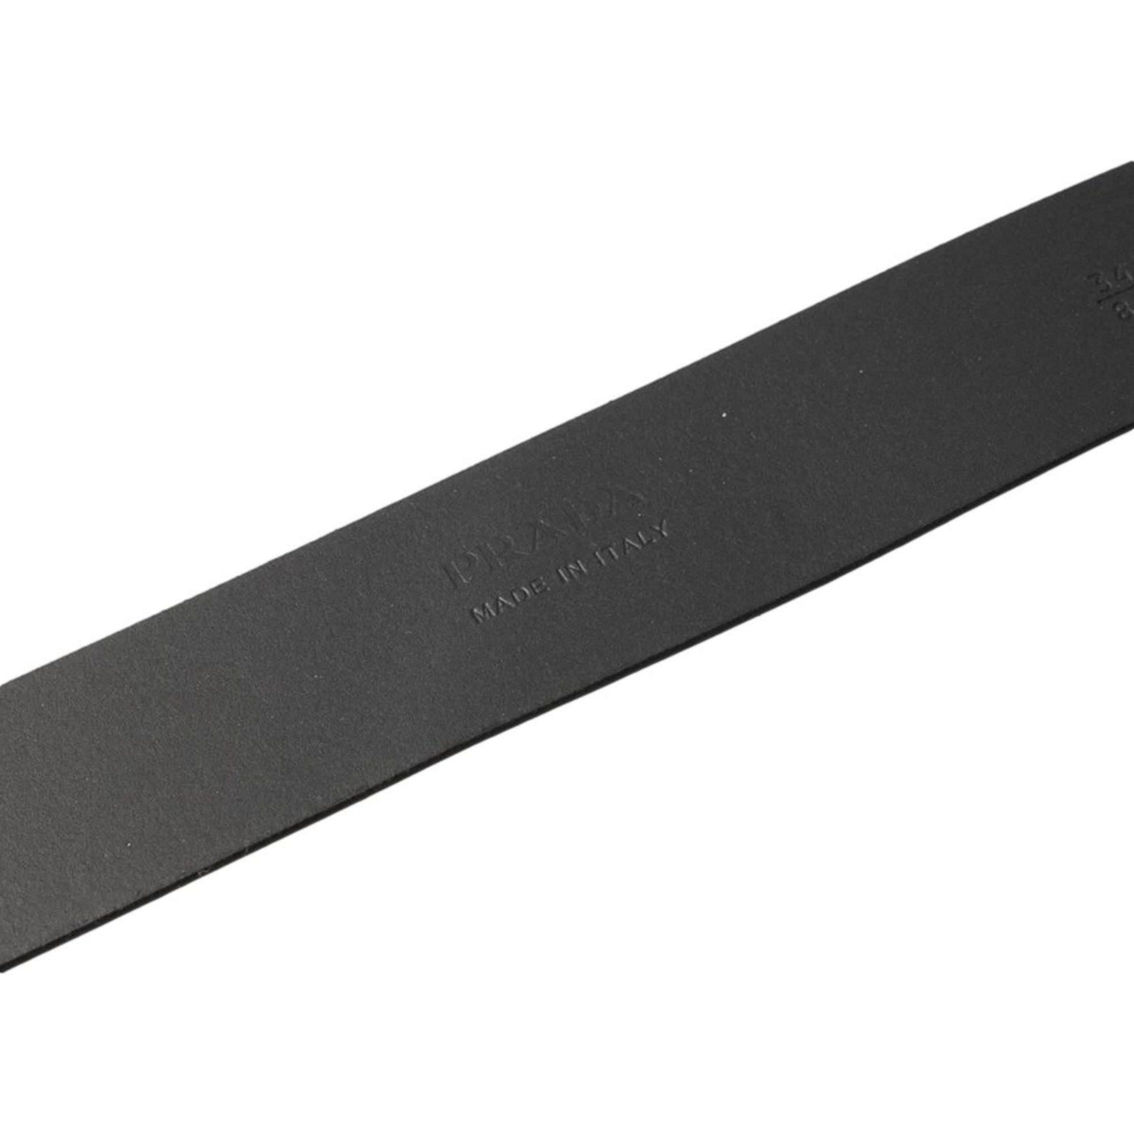 Prada Mens Navy Saffiano Leather Belt Silver Belt Buckle Size 100/40 (New) - Image 4 of 5